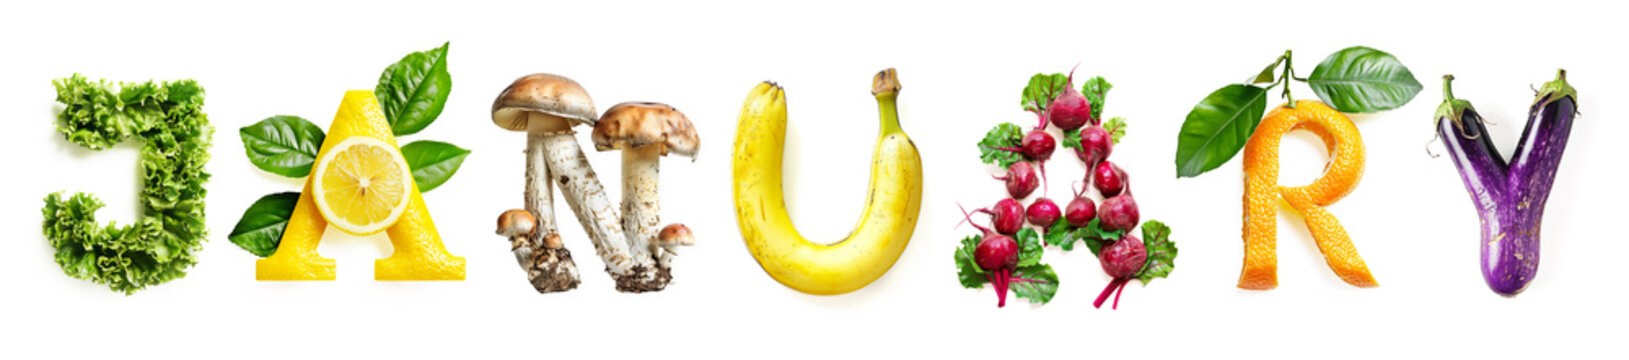 January Text Made of Fruits and Vegetables (Lettuce, Lemon, Mushrooms, Banana, BeetRoot, Orange, Aubergine) Isolated on White Background